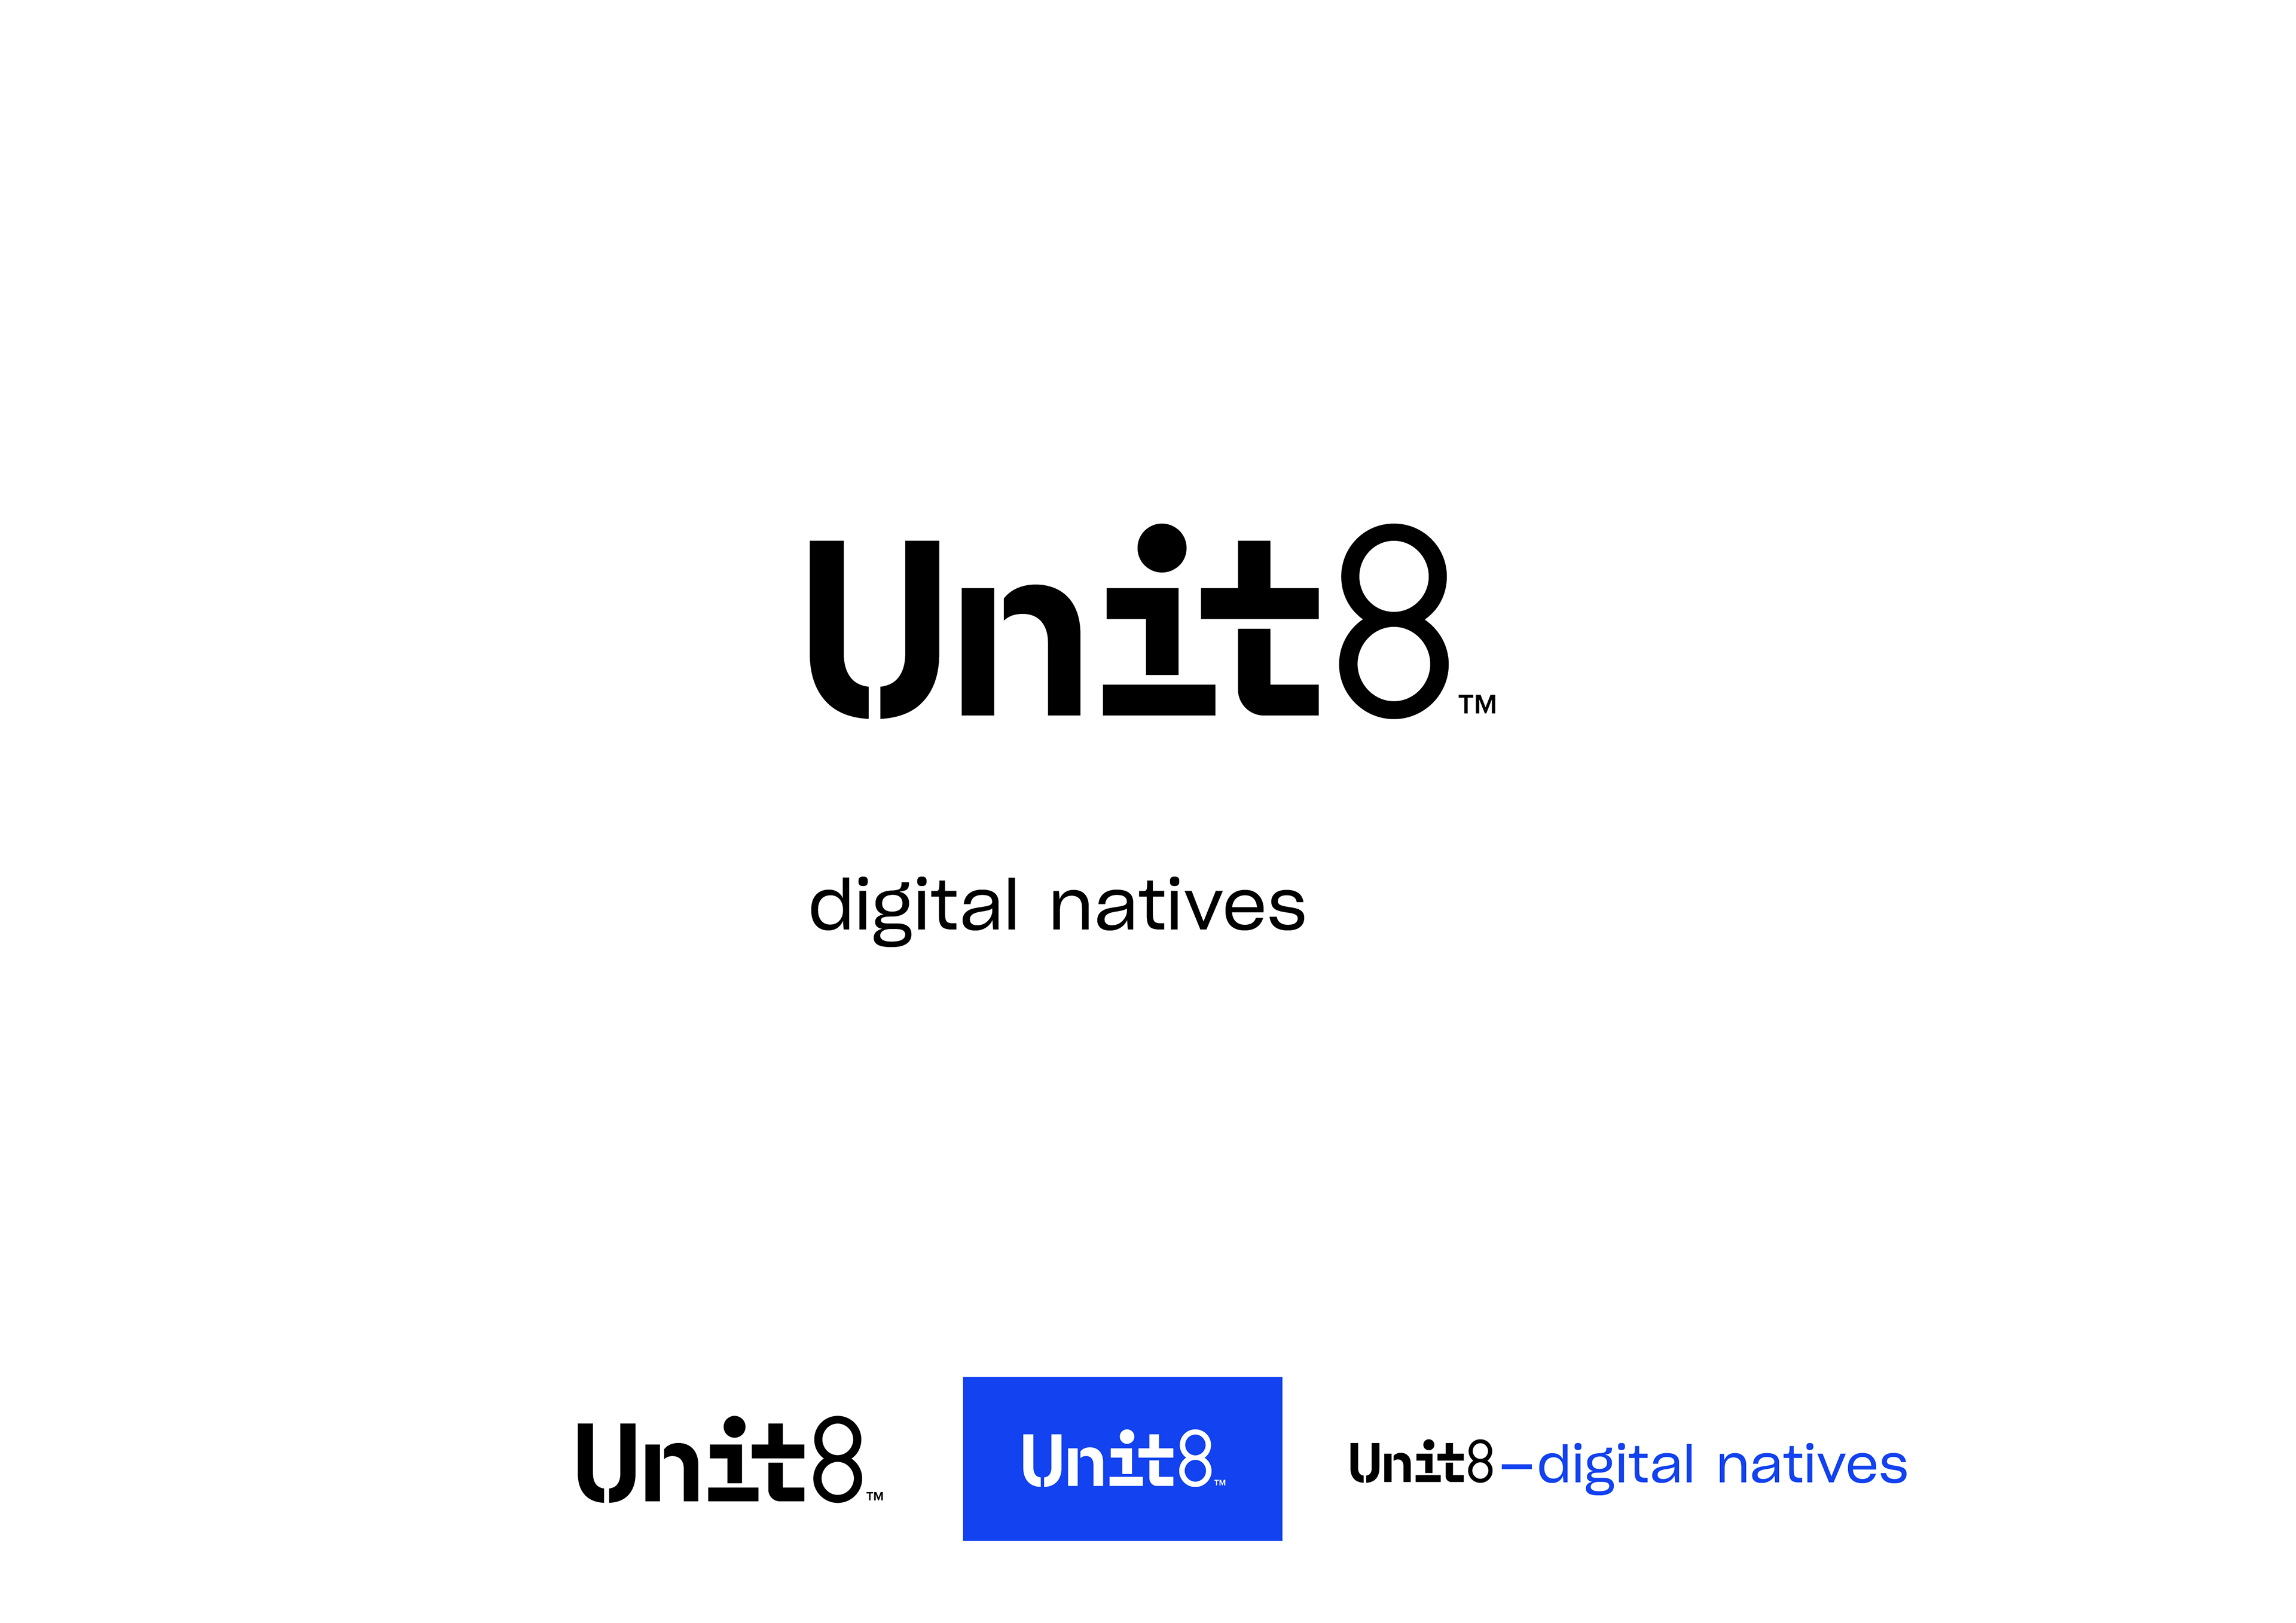 Unit 8 t. Юнит 8. Alphaopen логотип. Digital 8. Digital natives.